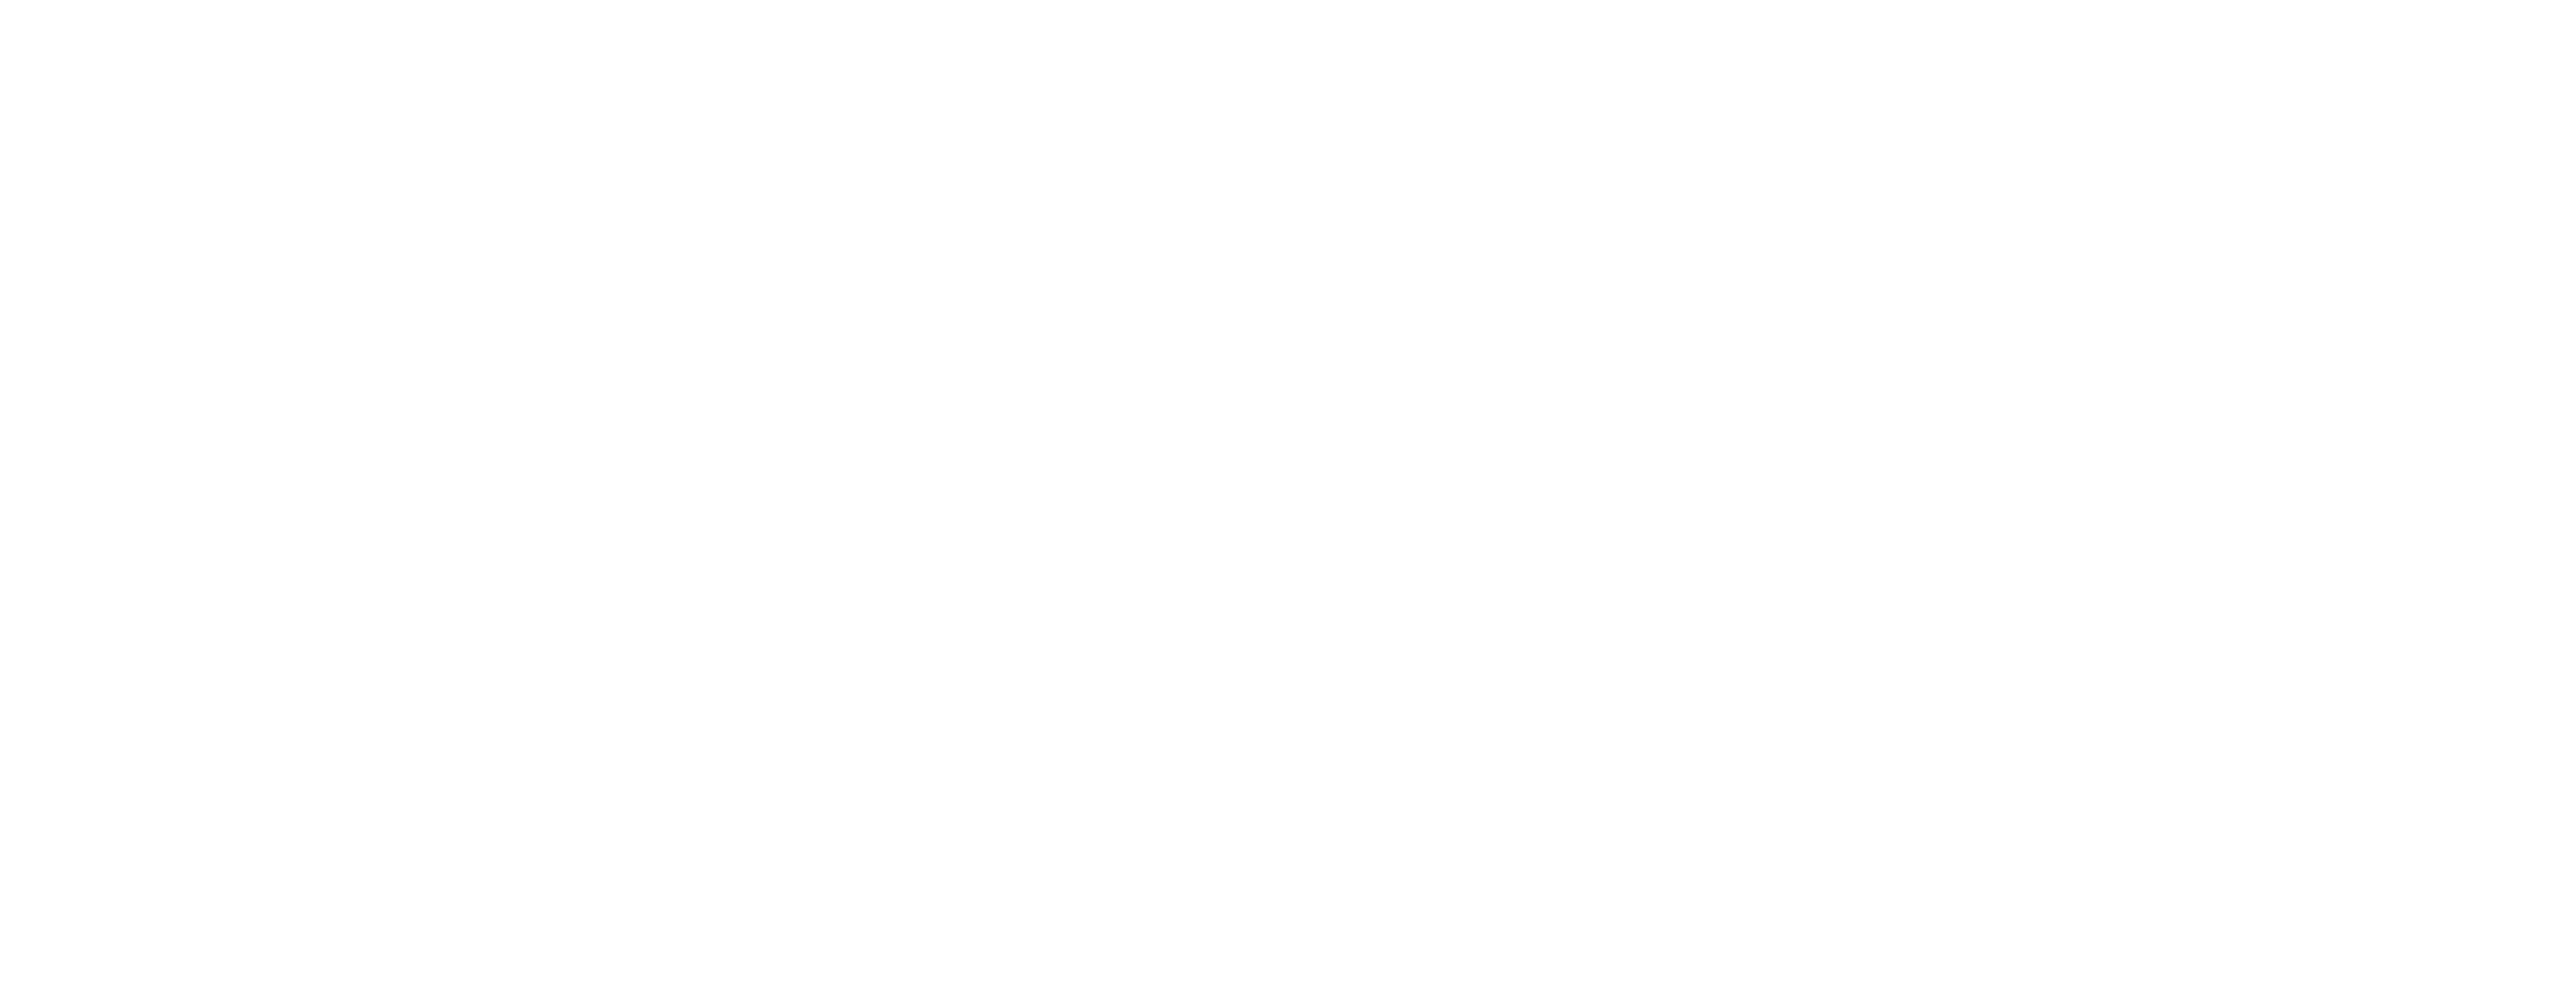 travis county wildfirecoalition logo white